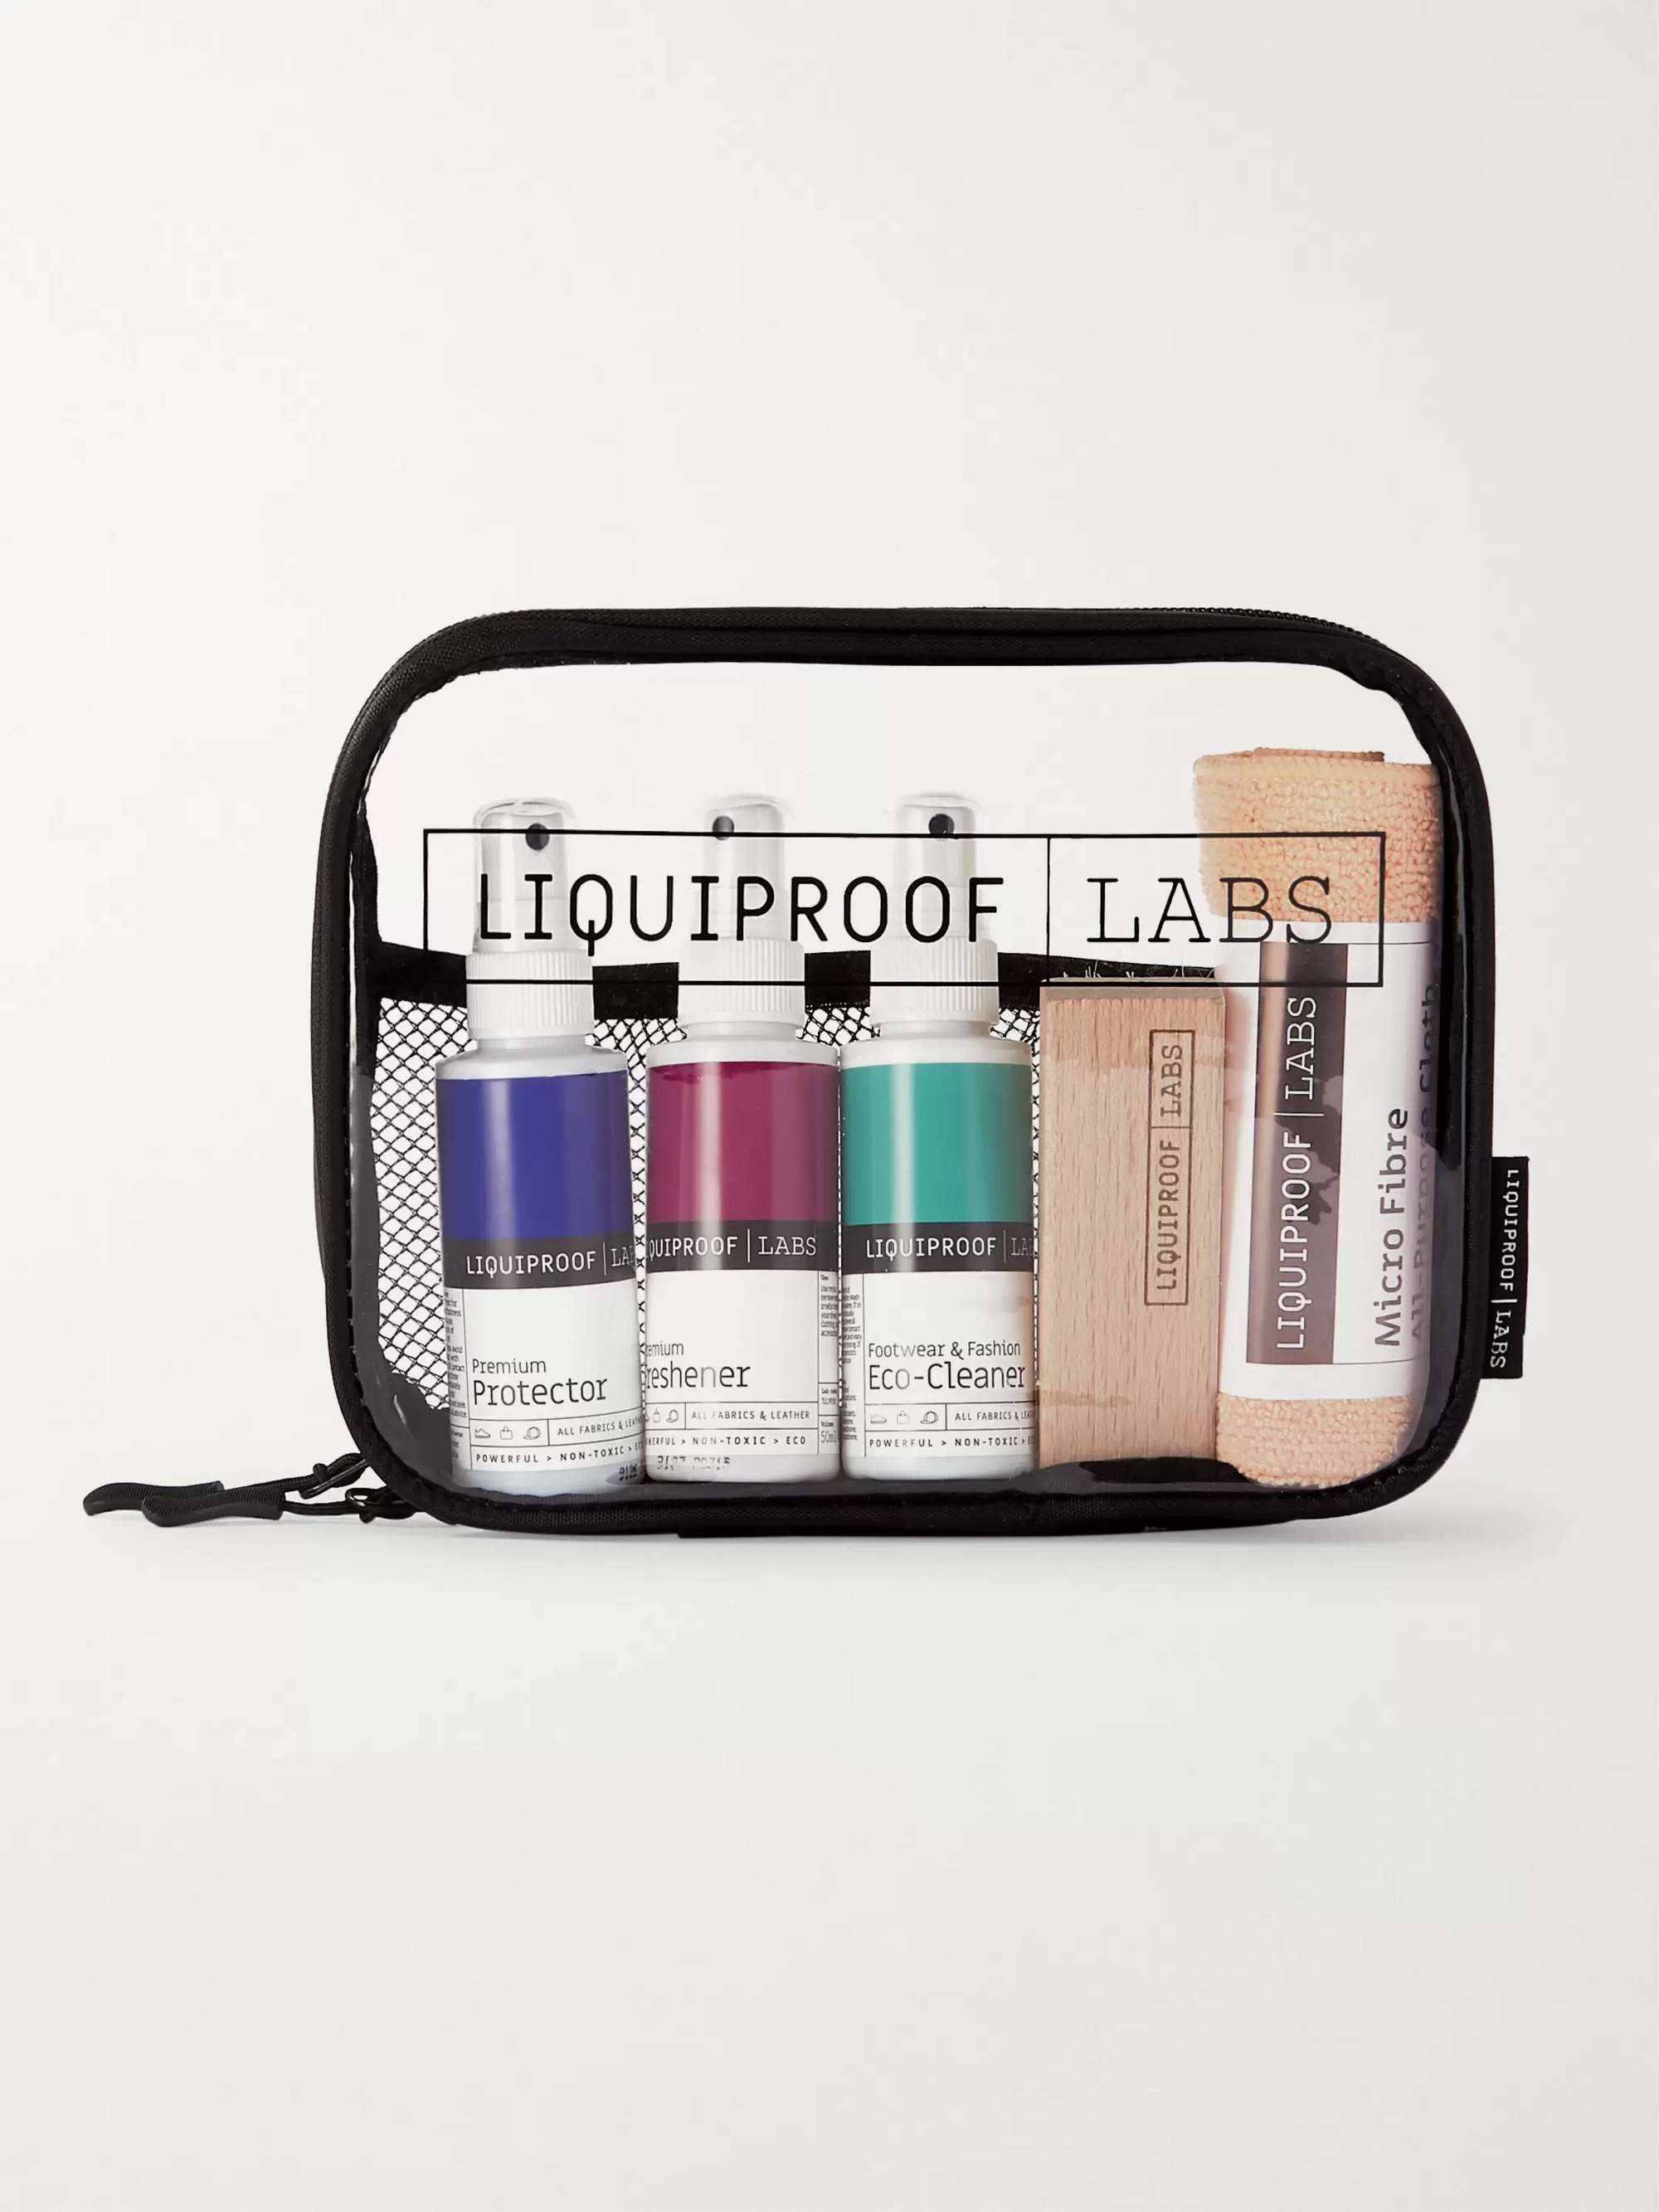 Liquiproof LABS Footwear & Fashion Care Travel Kit